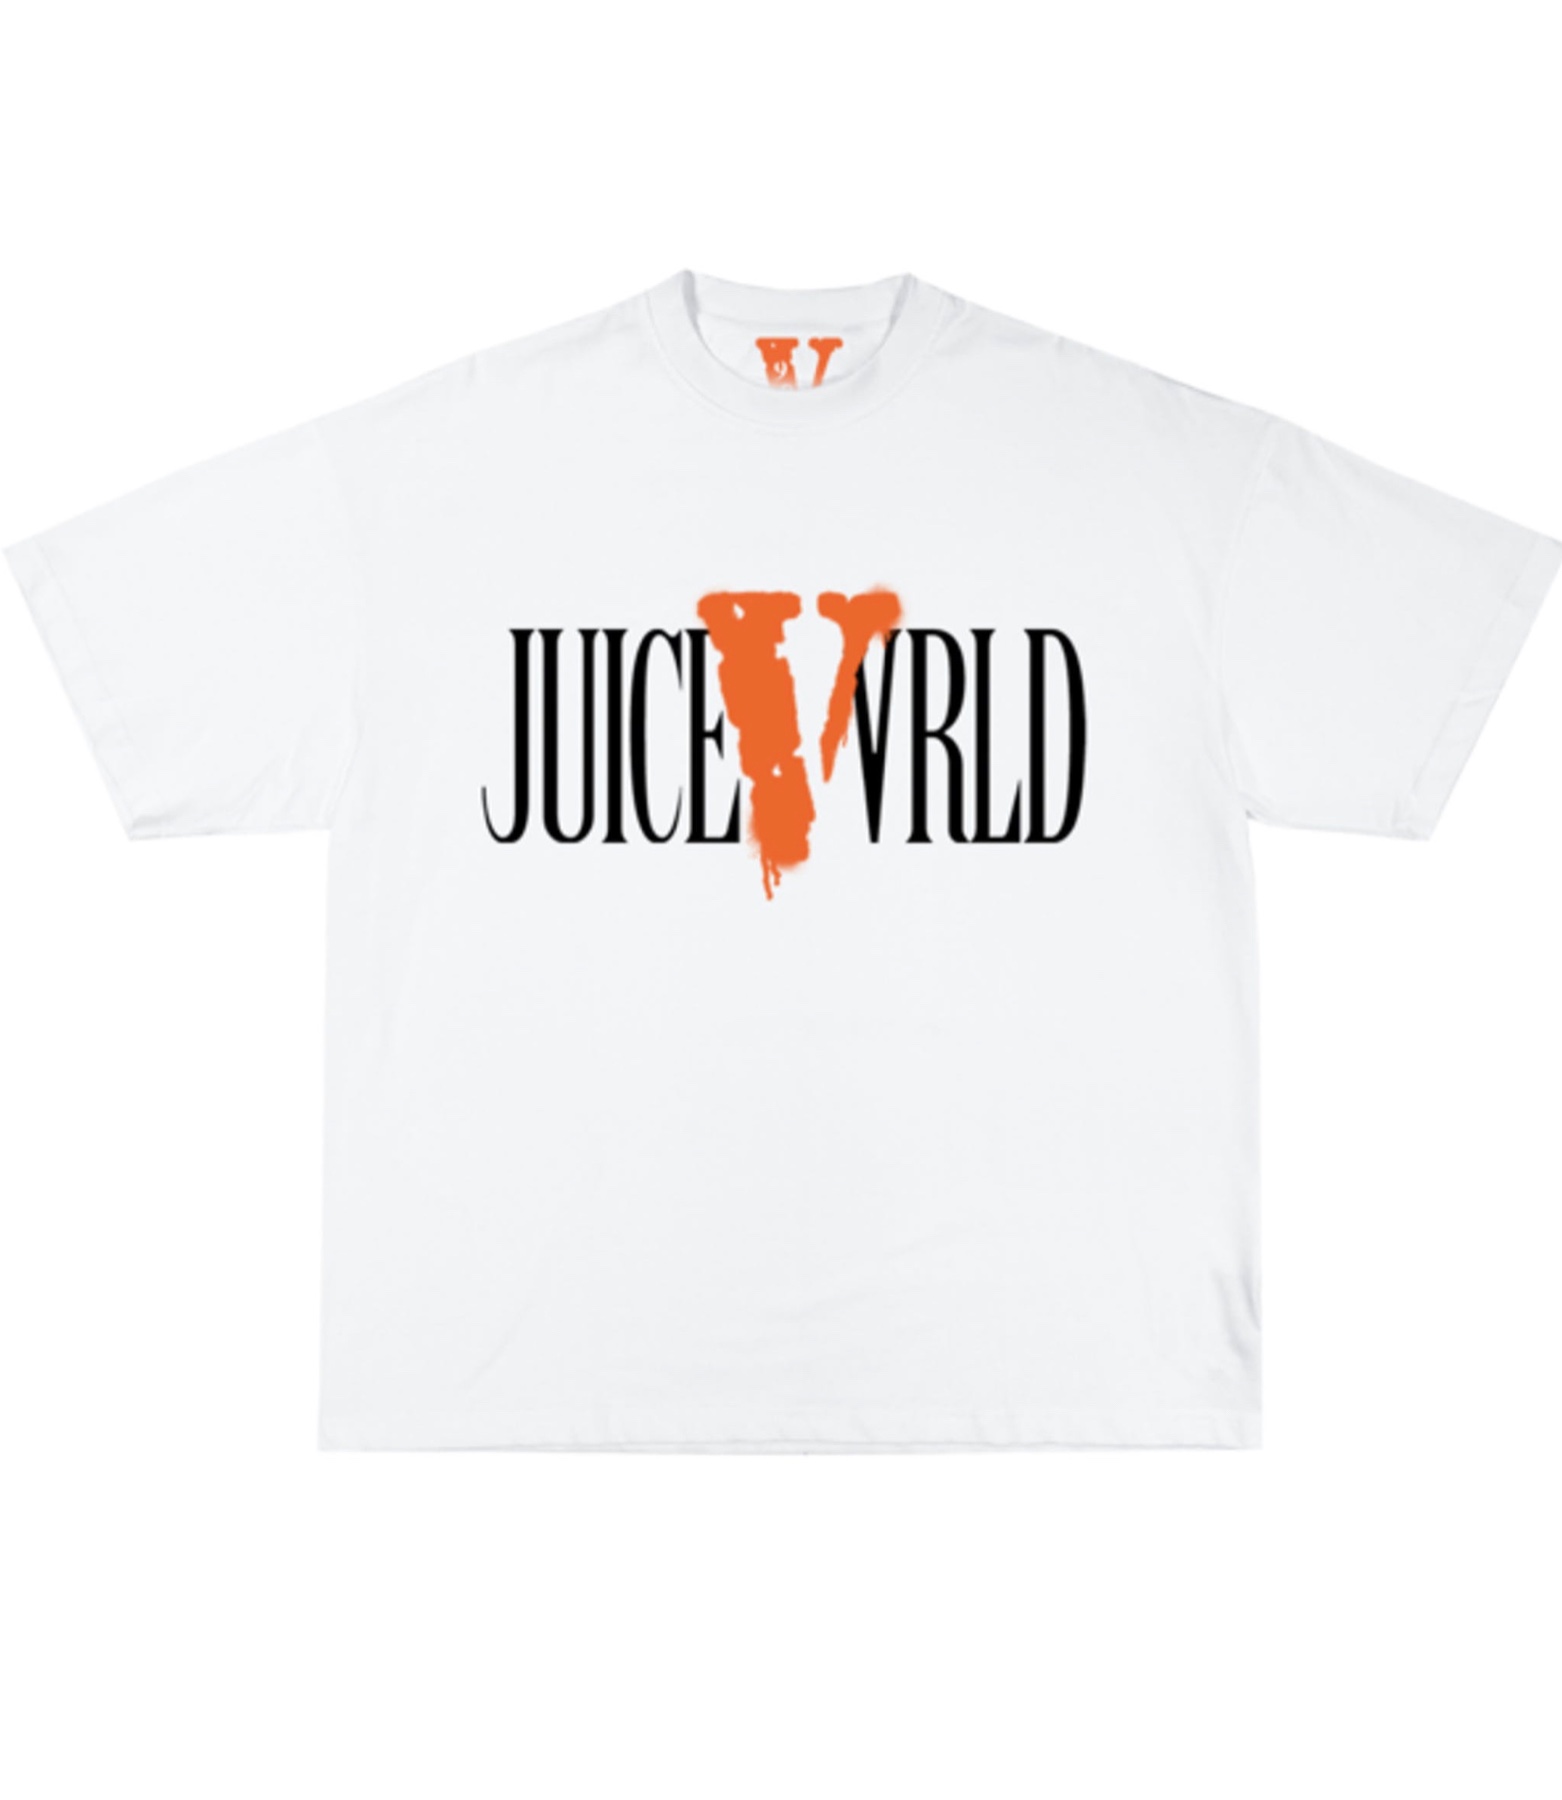 Juice WRLD x VLONE T-shirt